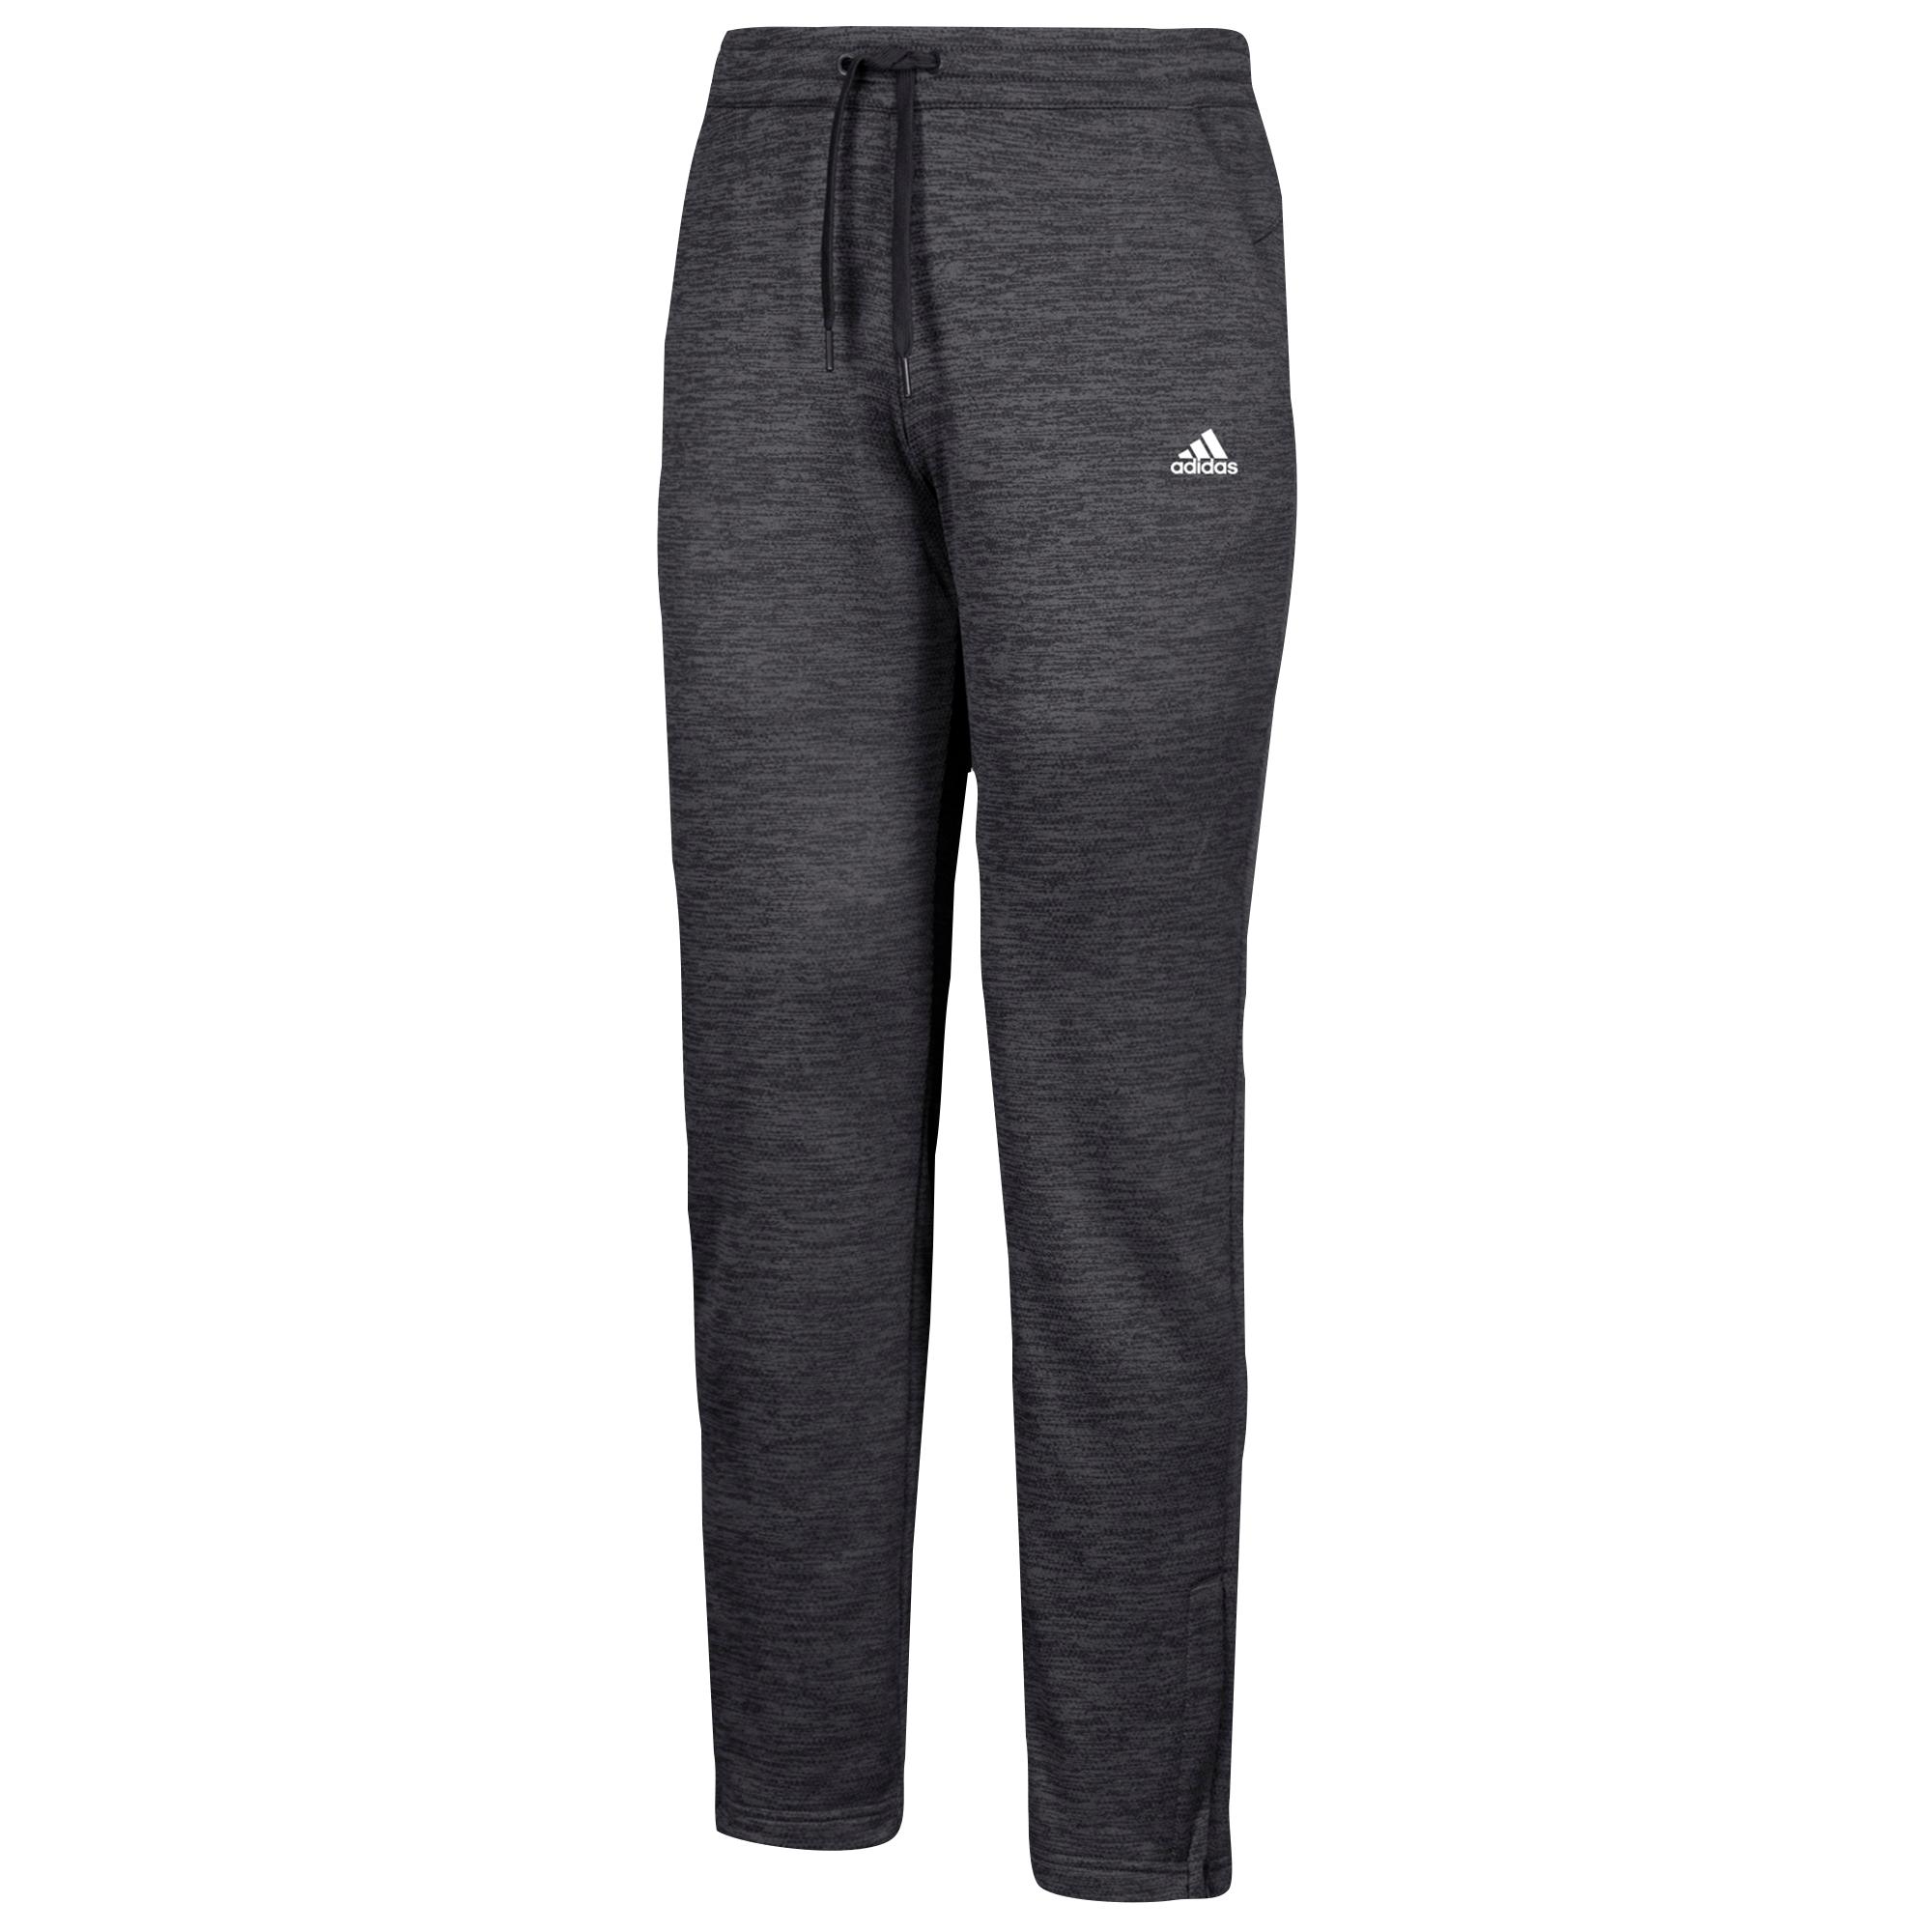 adidas Team Issue Fleece Pants in Black for Men - Lyst